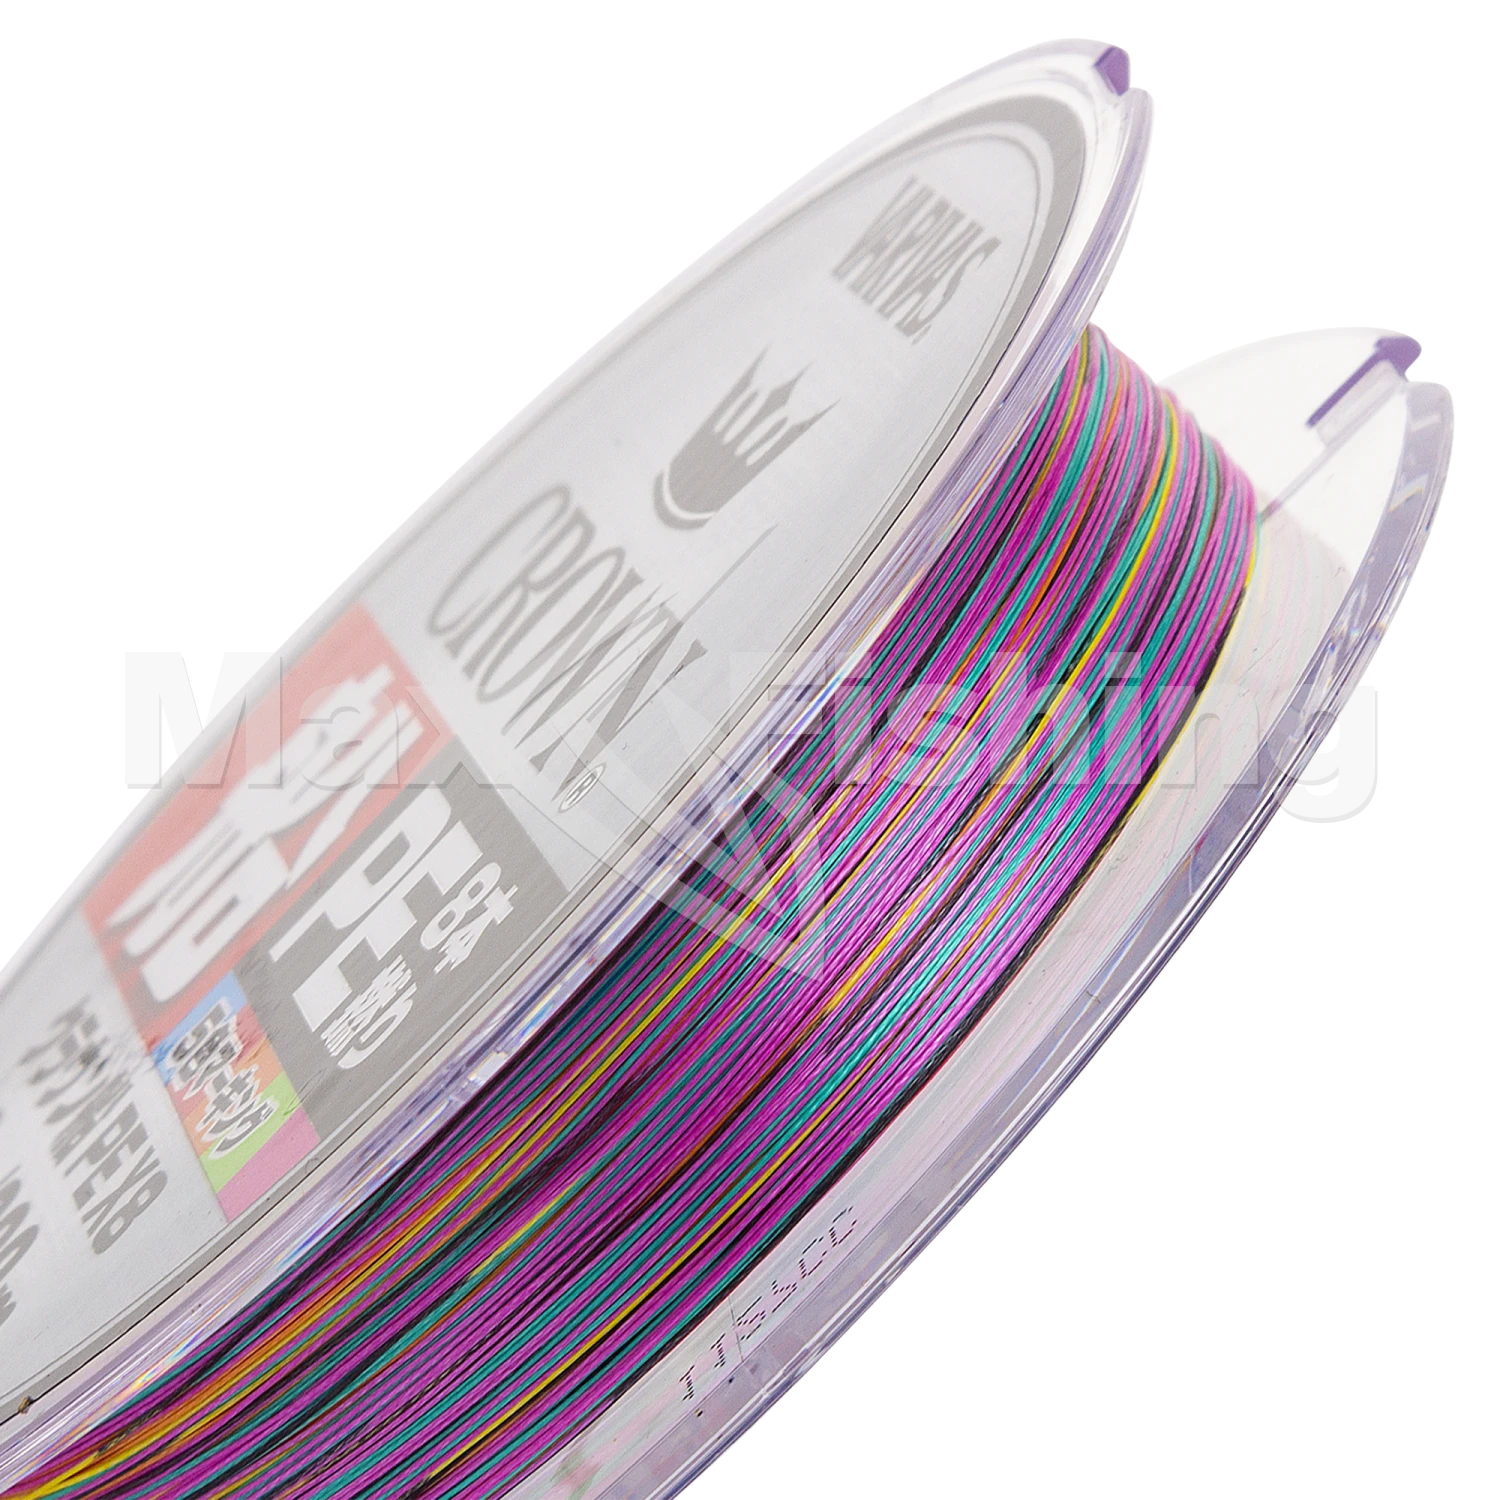 Шнур плетеный Varivas Crown Fune PE X8 #2 0,235мм 200м (5color)